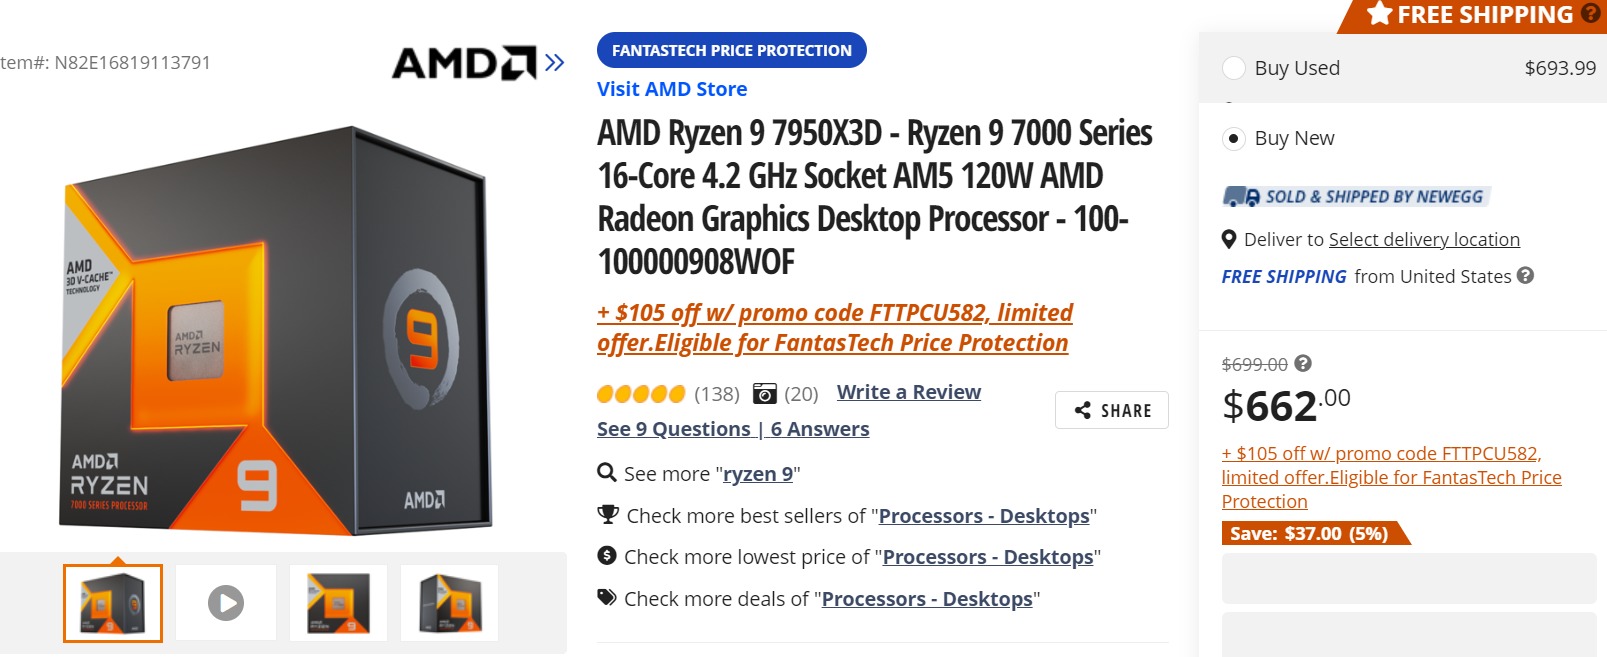 Amd Ryzen 9 7950 X 3d Cpu Processor With Radeon Graphics 16/32 120w Am5  144mb 5700mhz Tray - 100-000000908